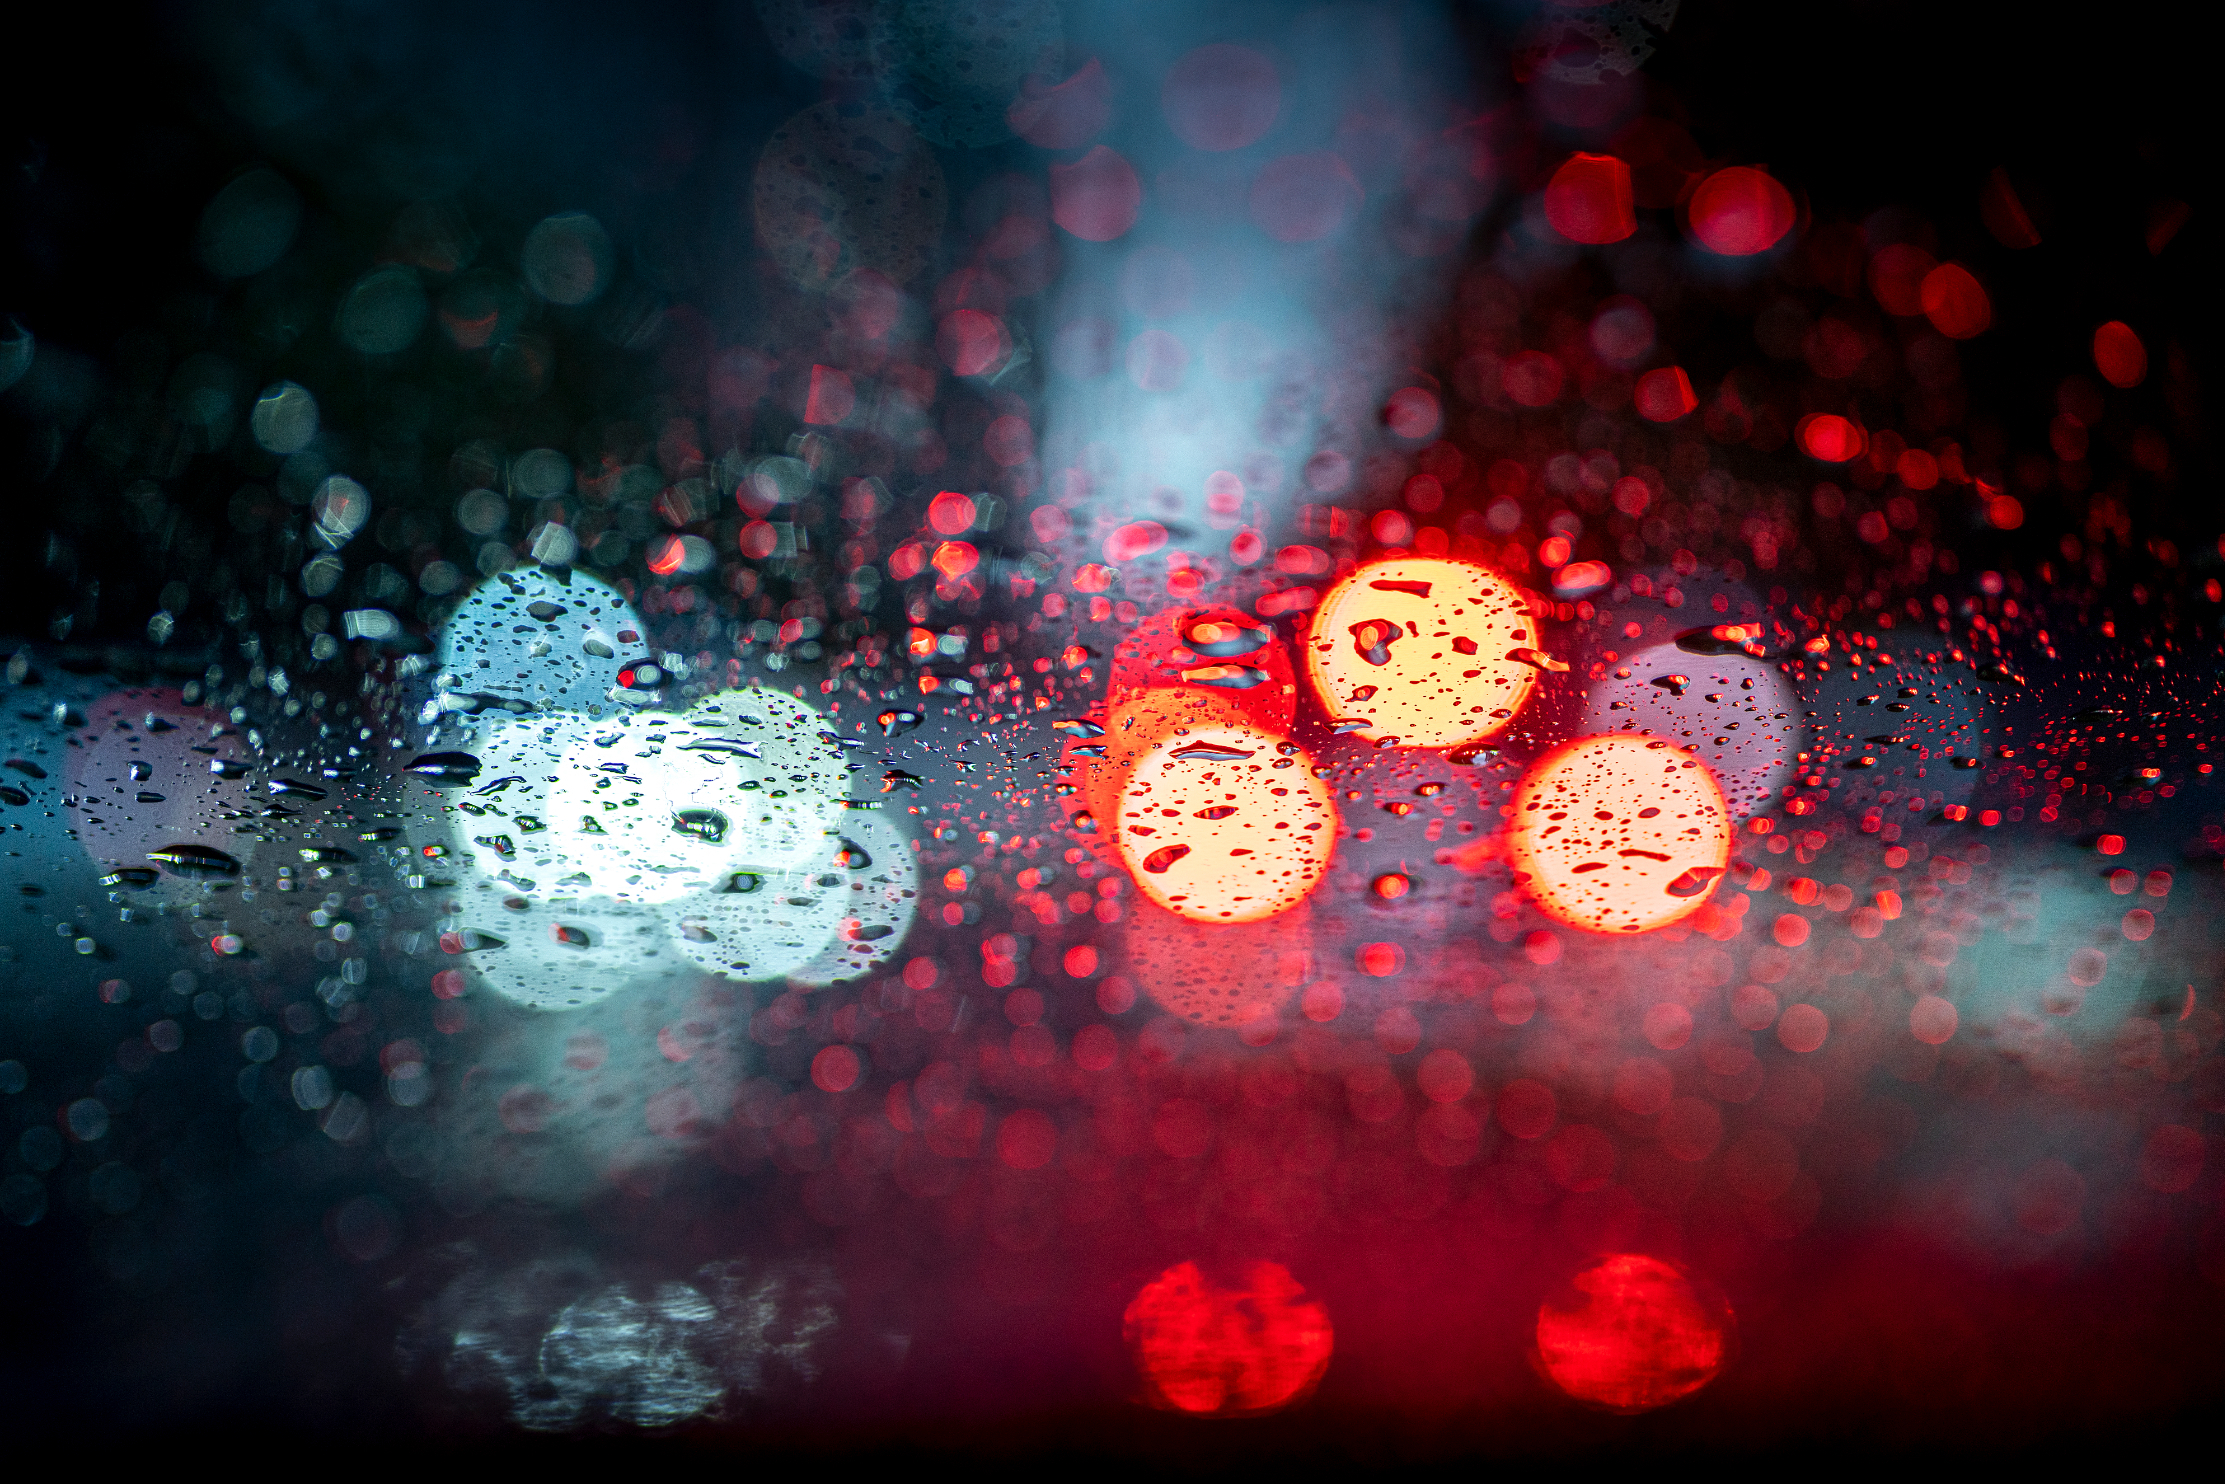 blurry tail lights through a rainy window